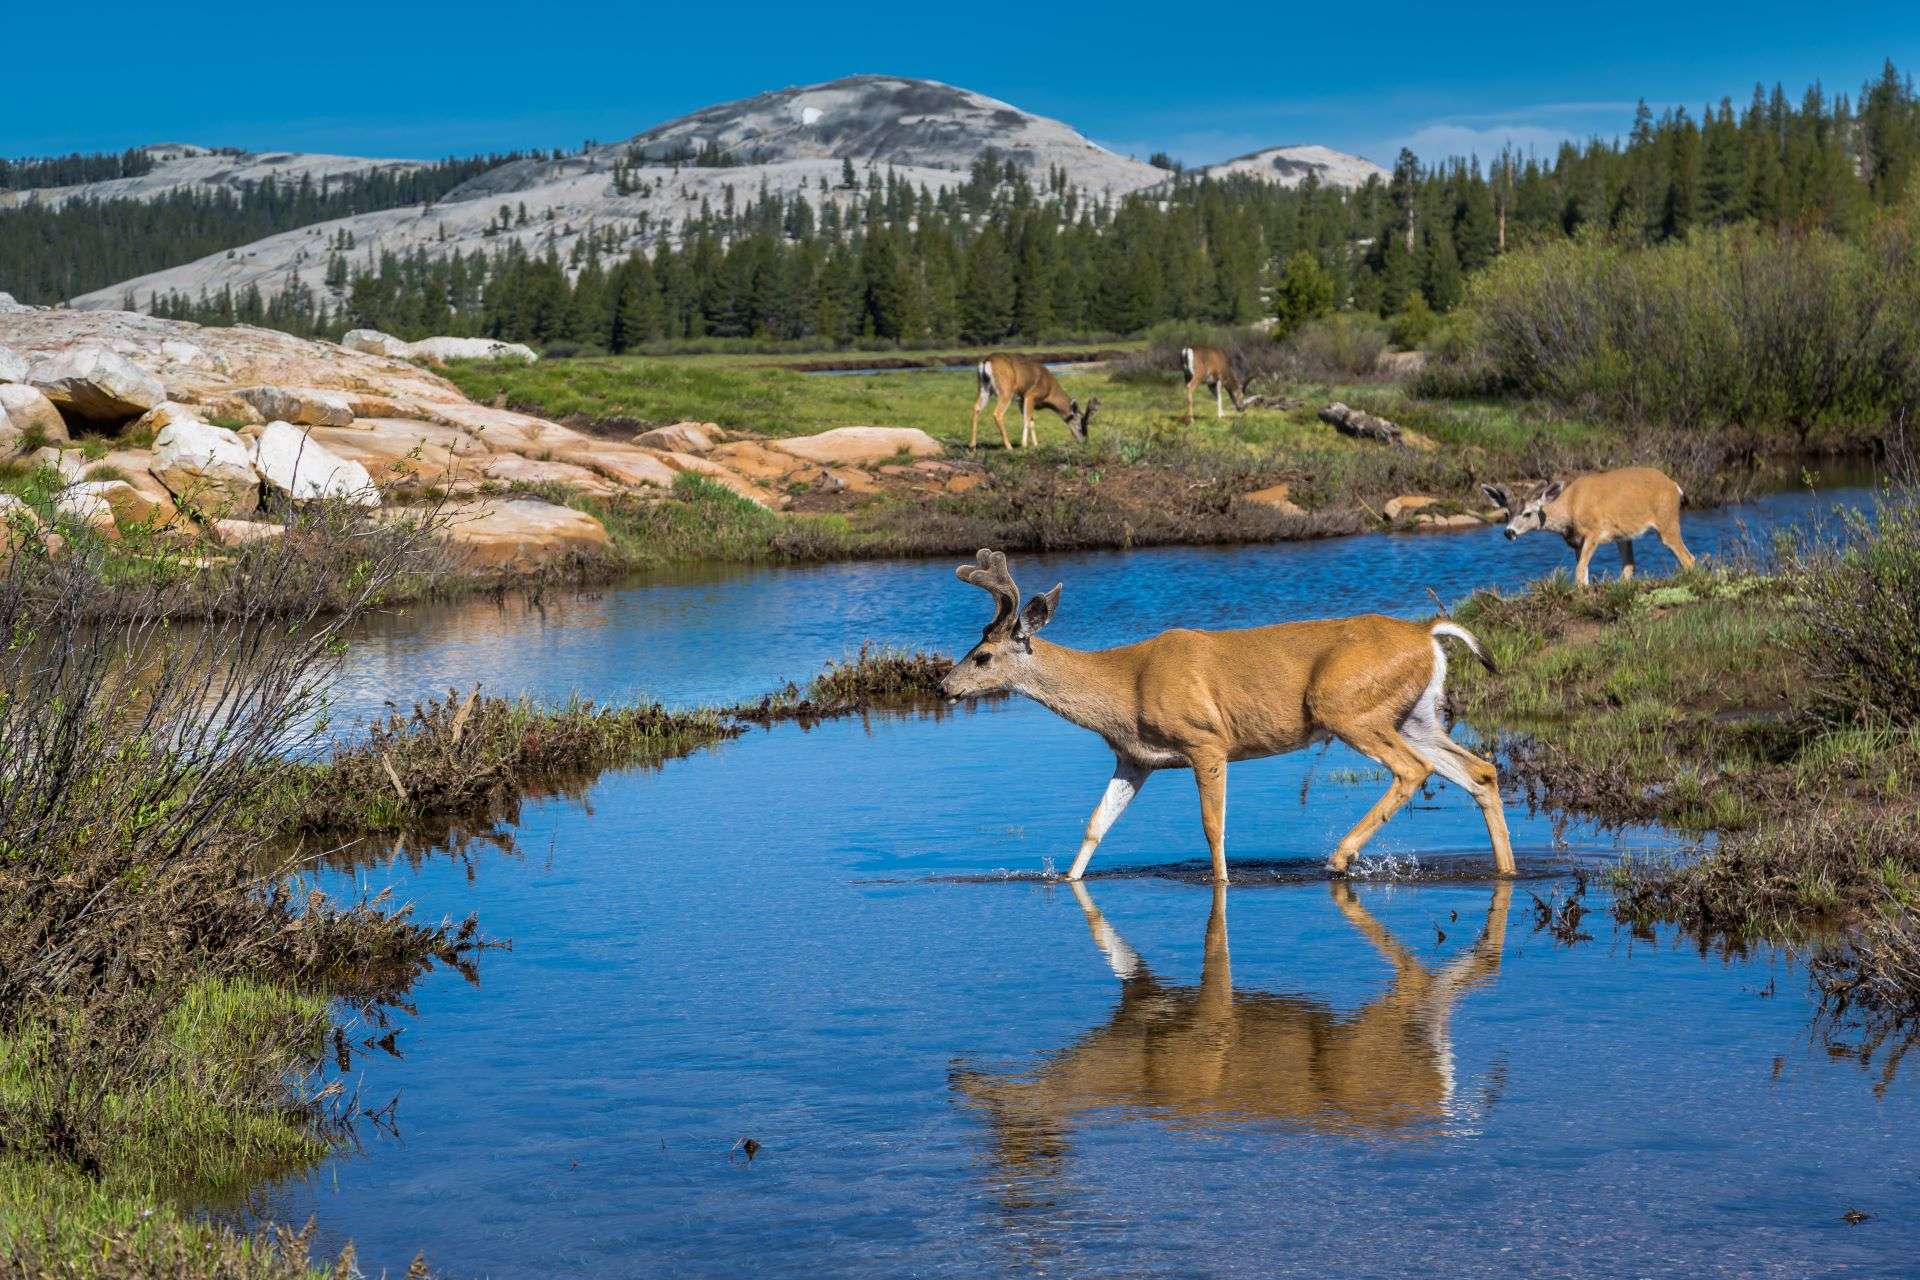 Mule deer foraging around a river in Tuolumne Meadows, Yosemite.